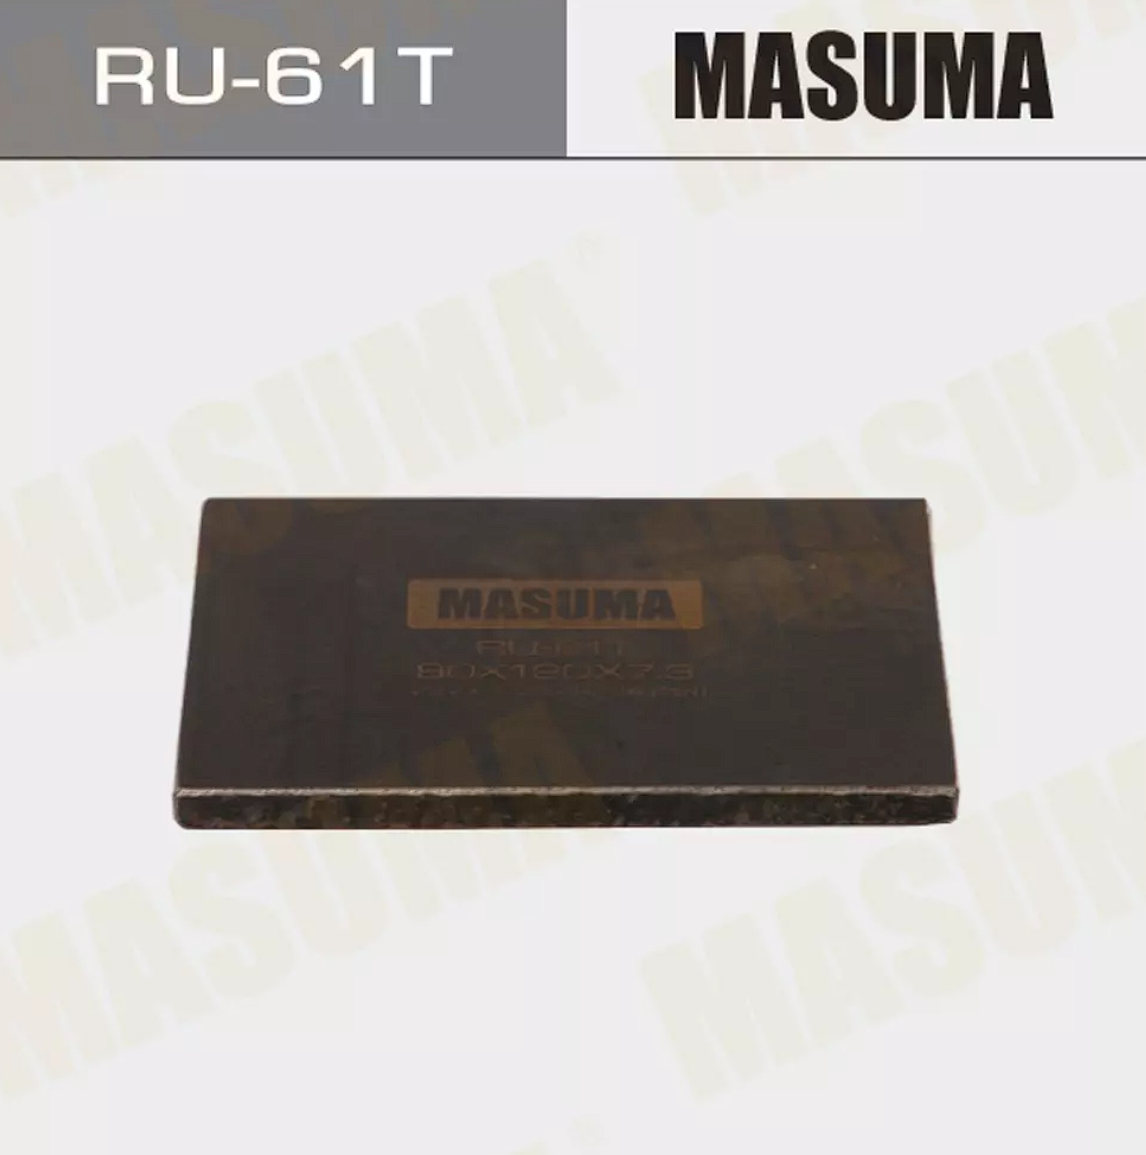 Masuma пластина для пресса 80х120х7.3mm ru61t